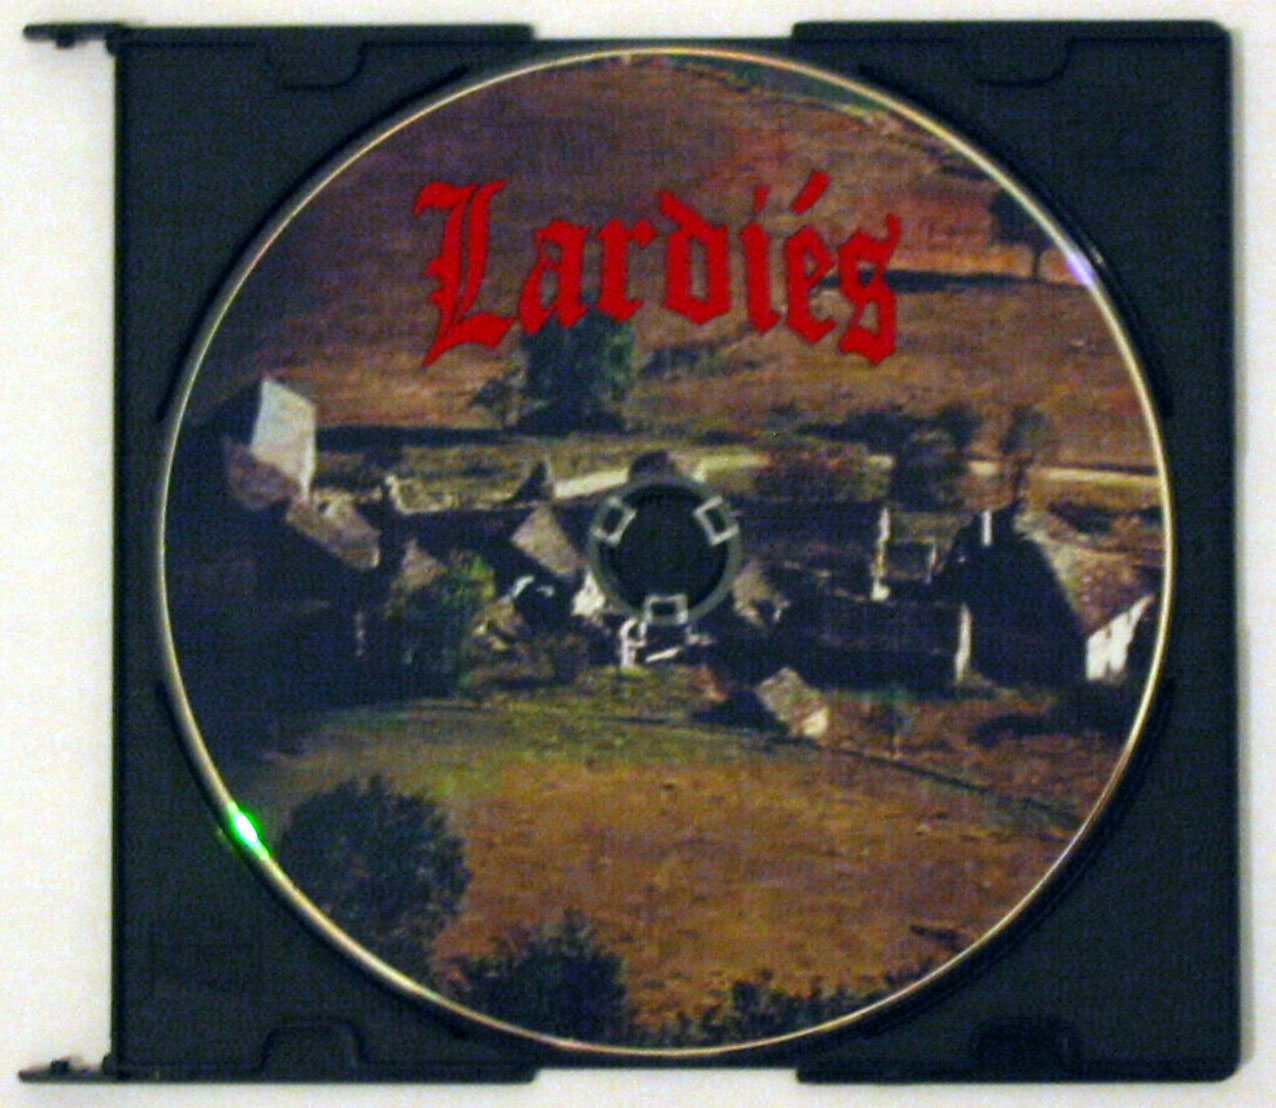 CD-ROM con el estudio del apellido Lardiés